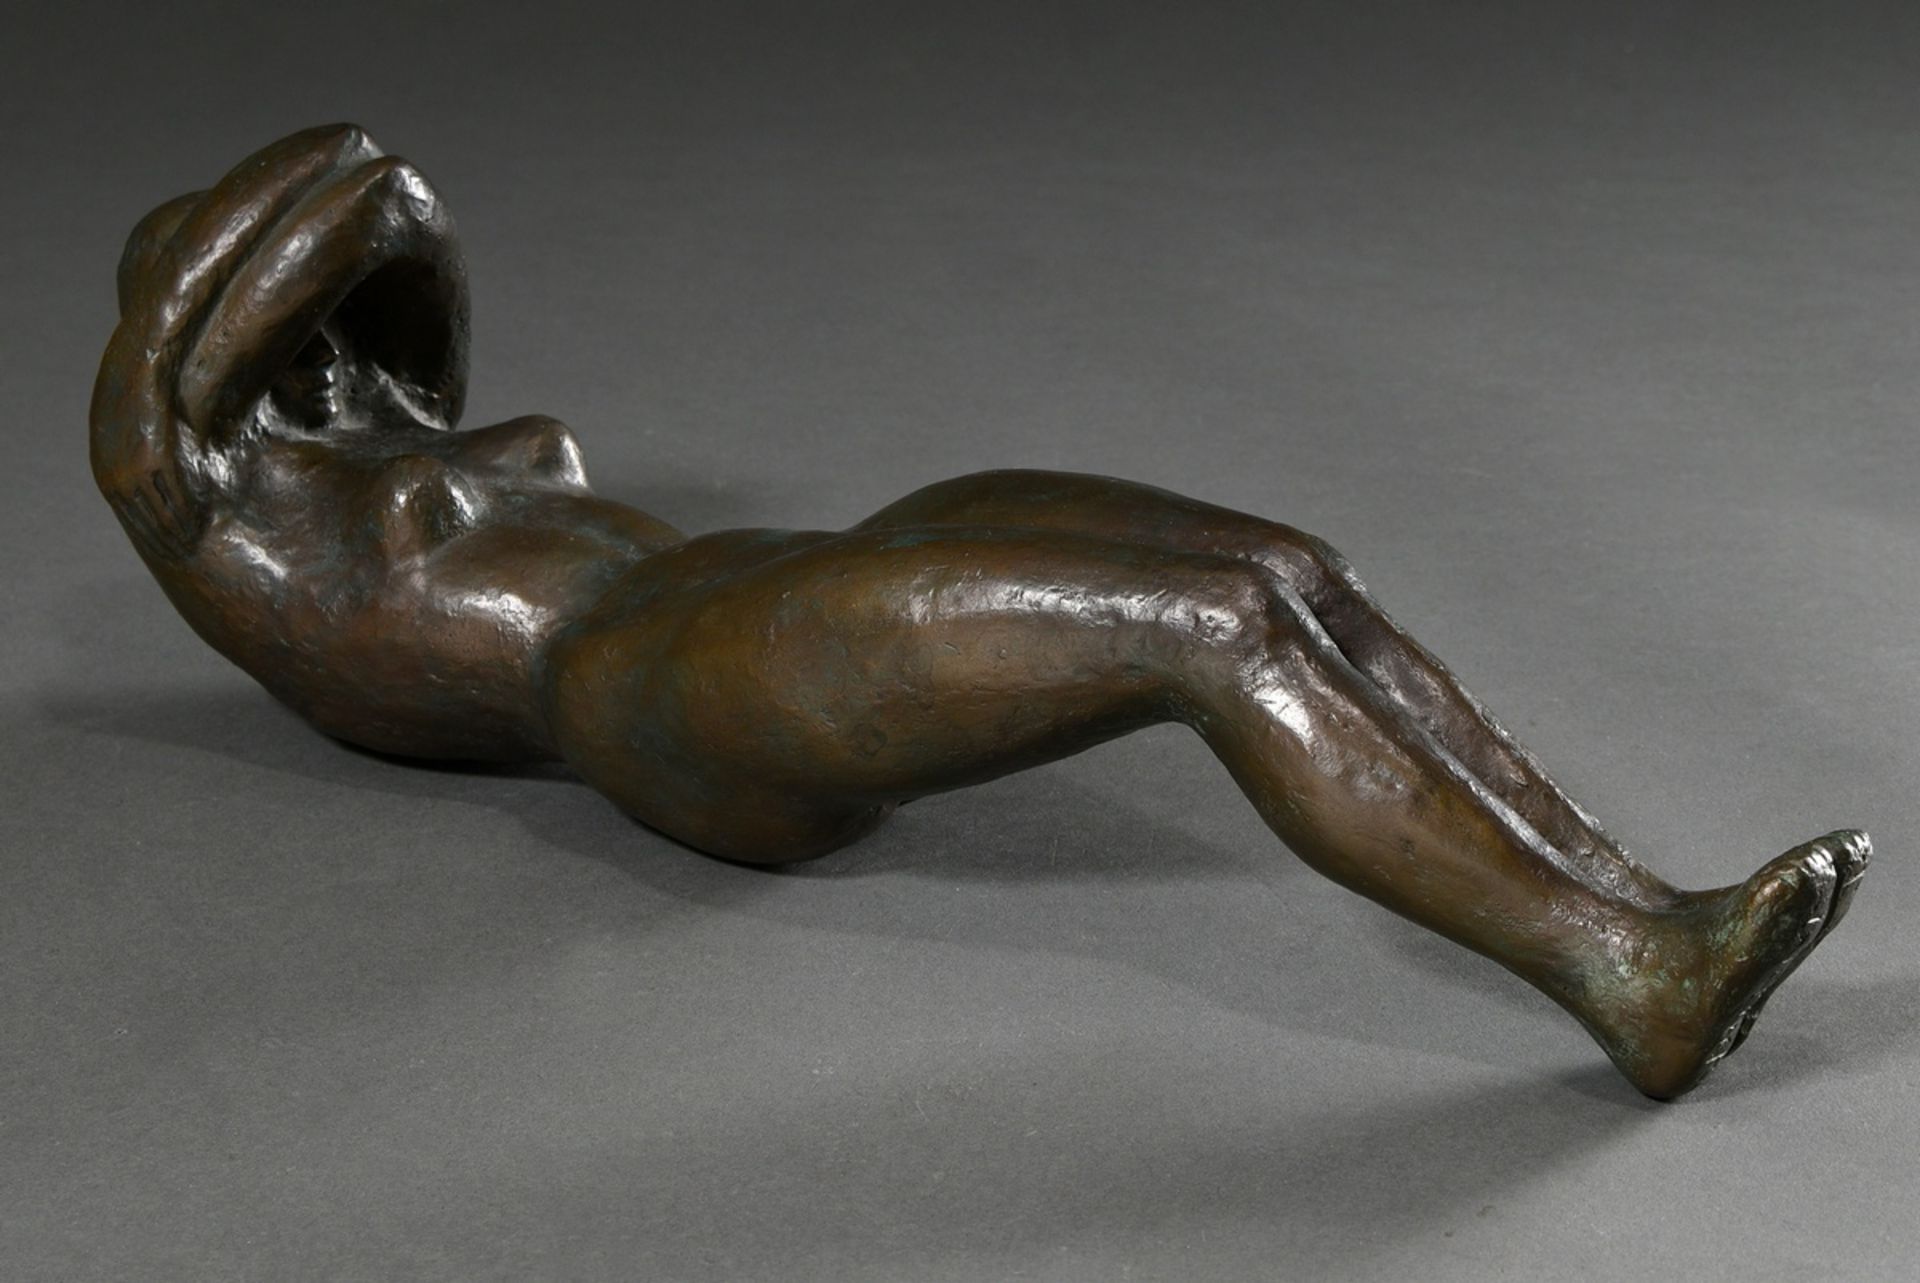 Woebcke, Albert Friedrich Christian (1896-1980) "Reclining female nude", bronze, hollow casting, in